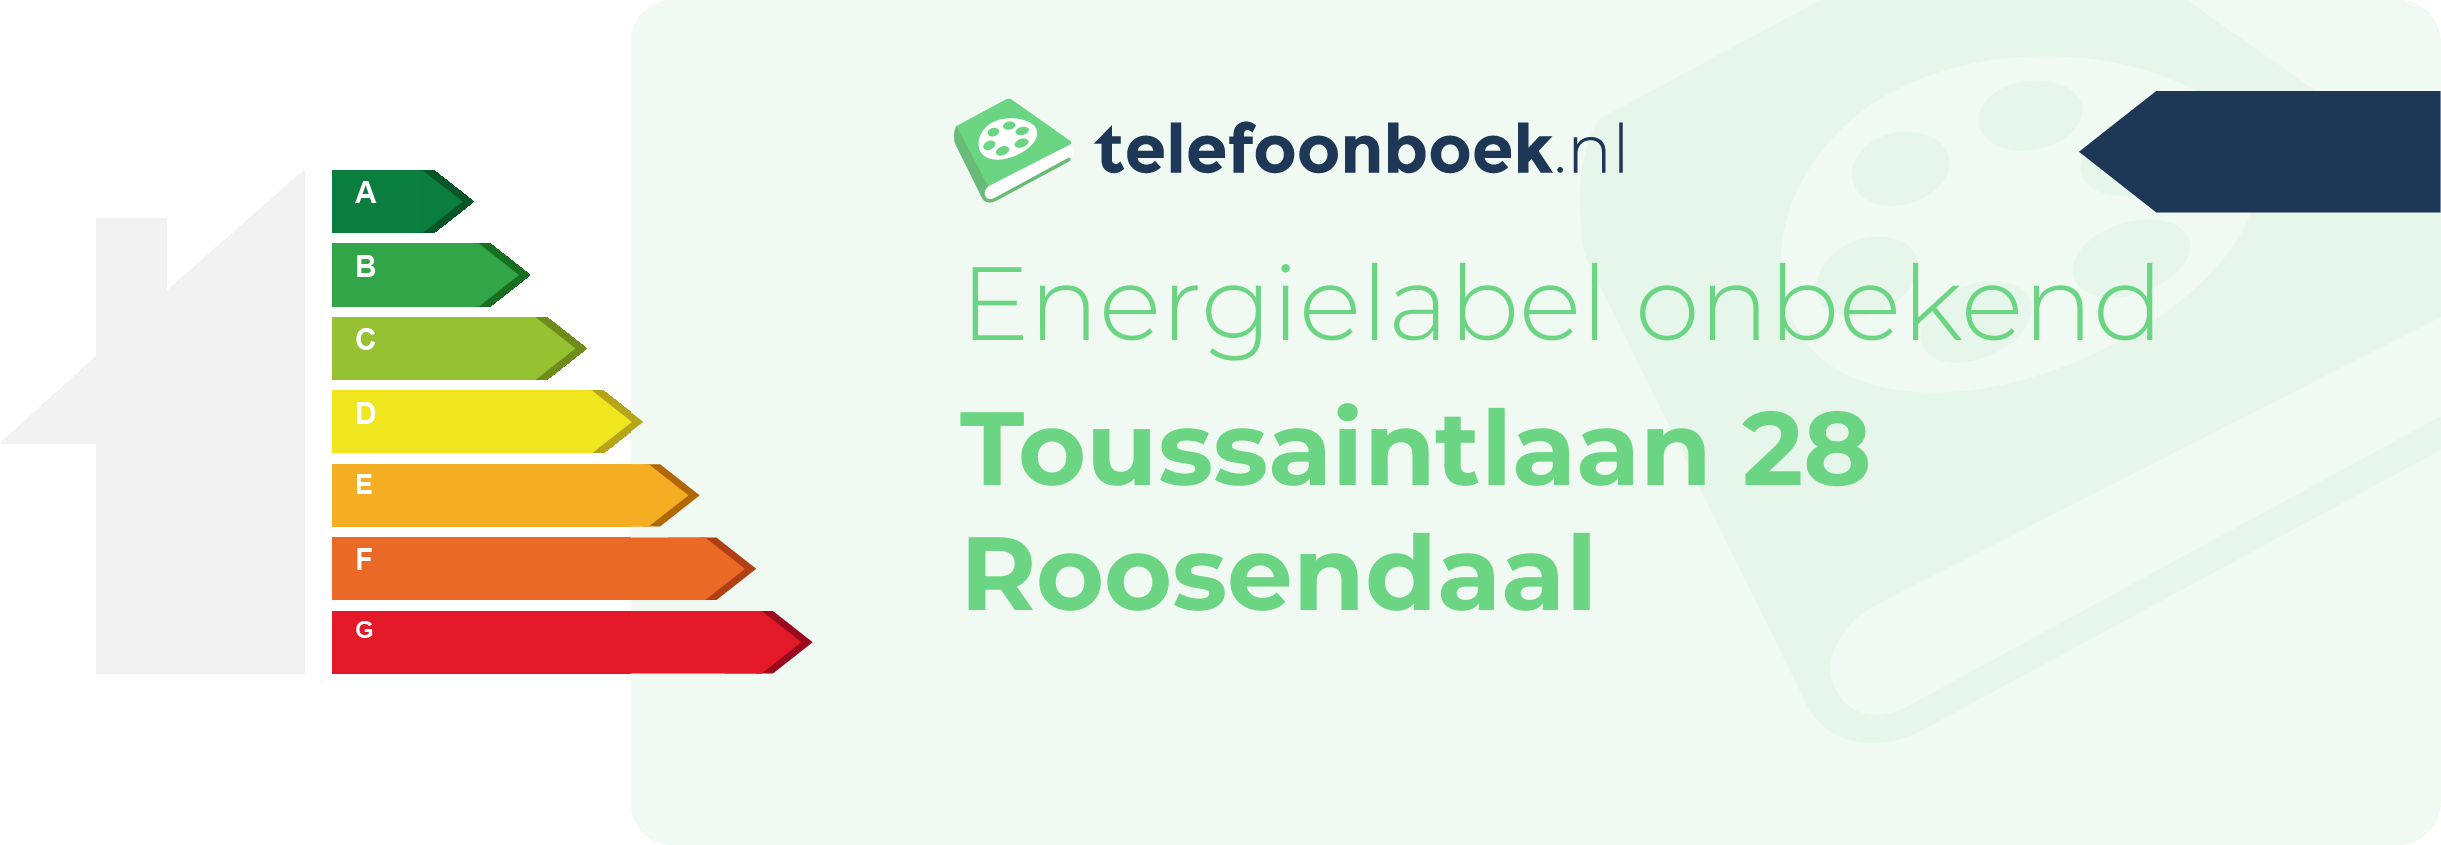 Energielabel Toussaintlaan 28 Roosendaal